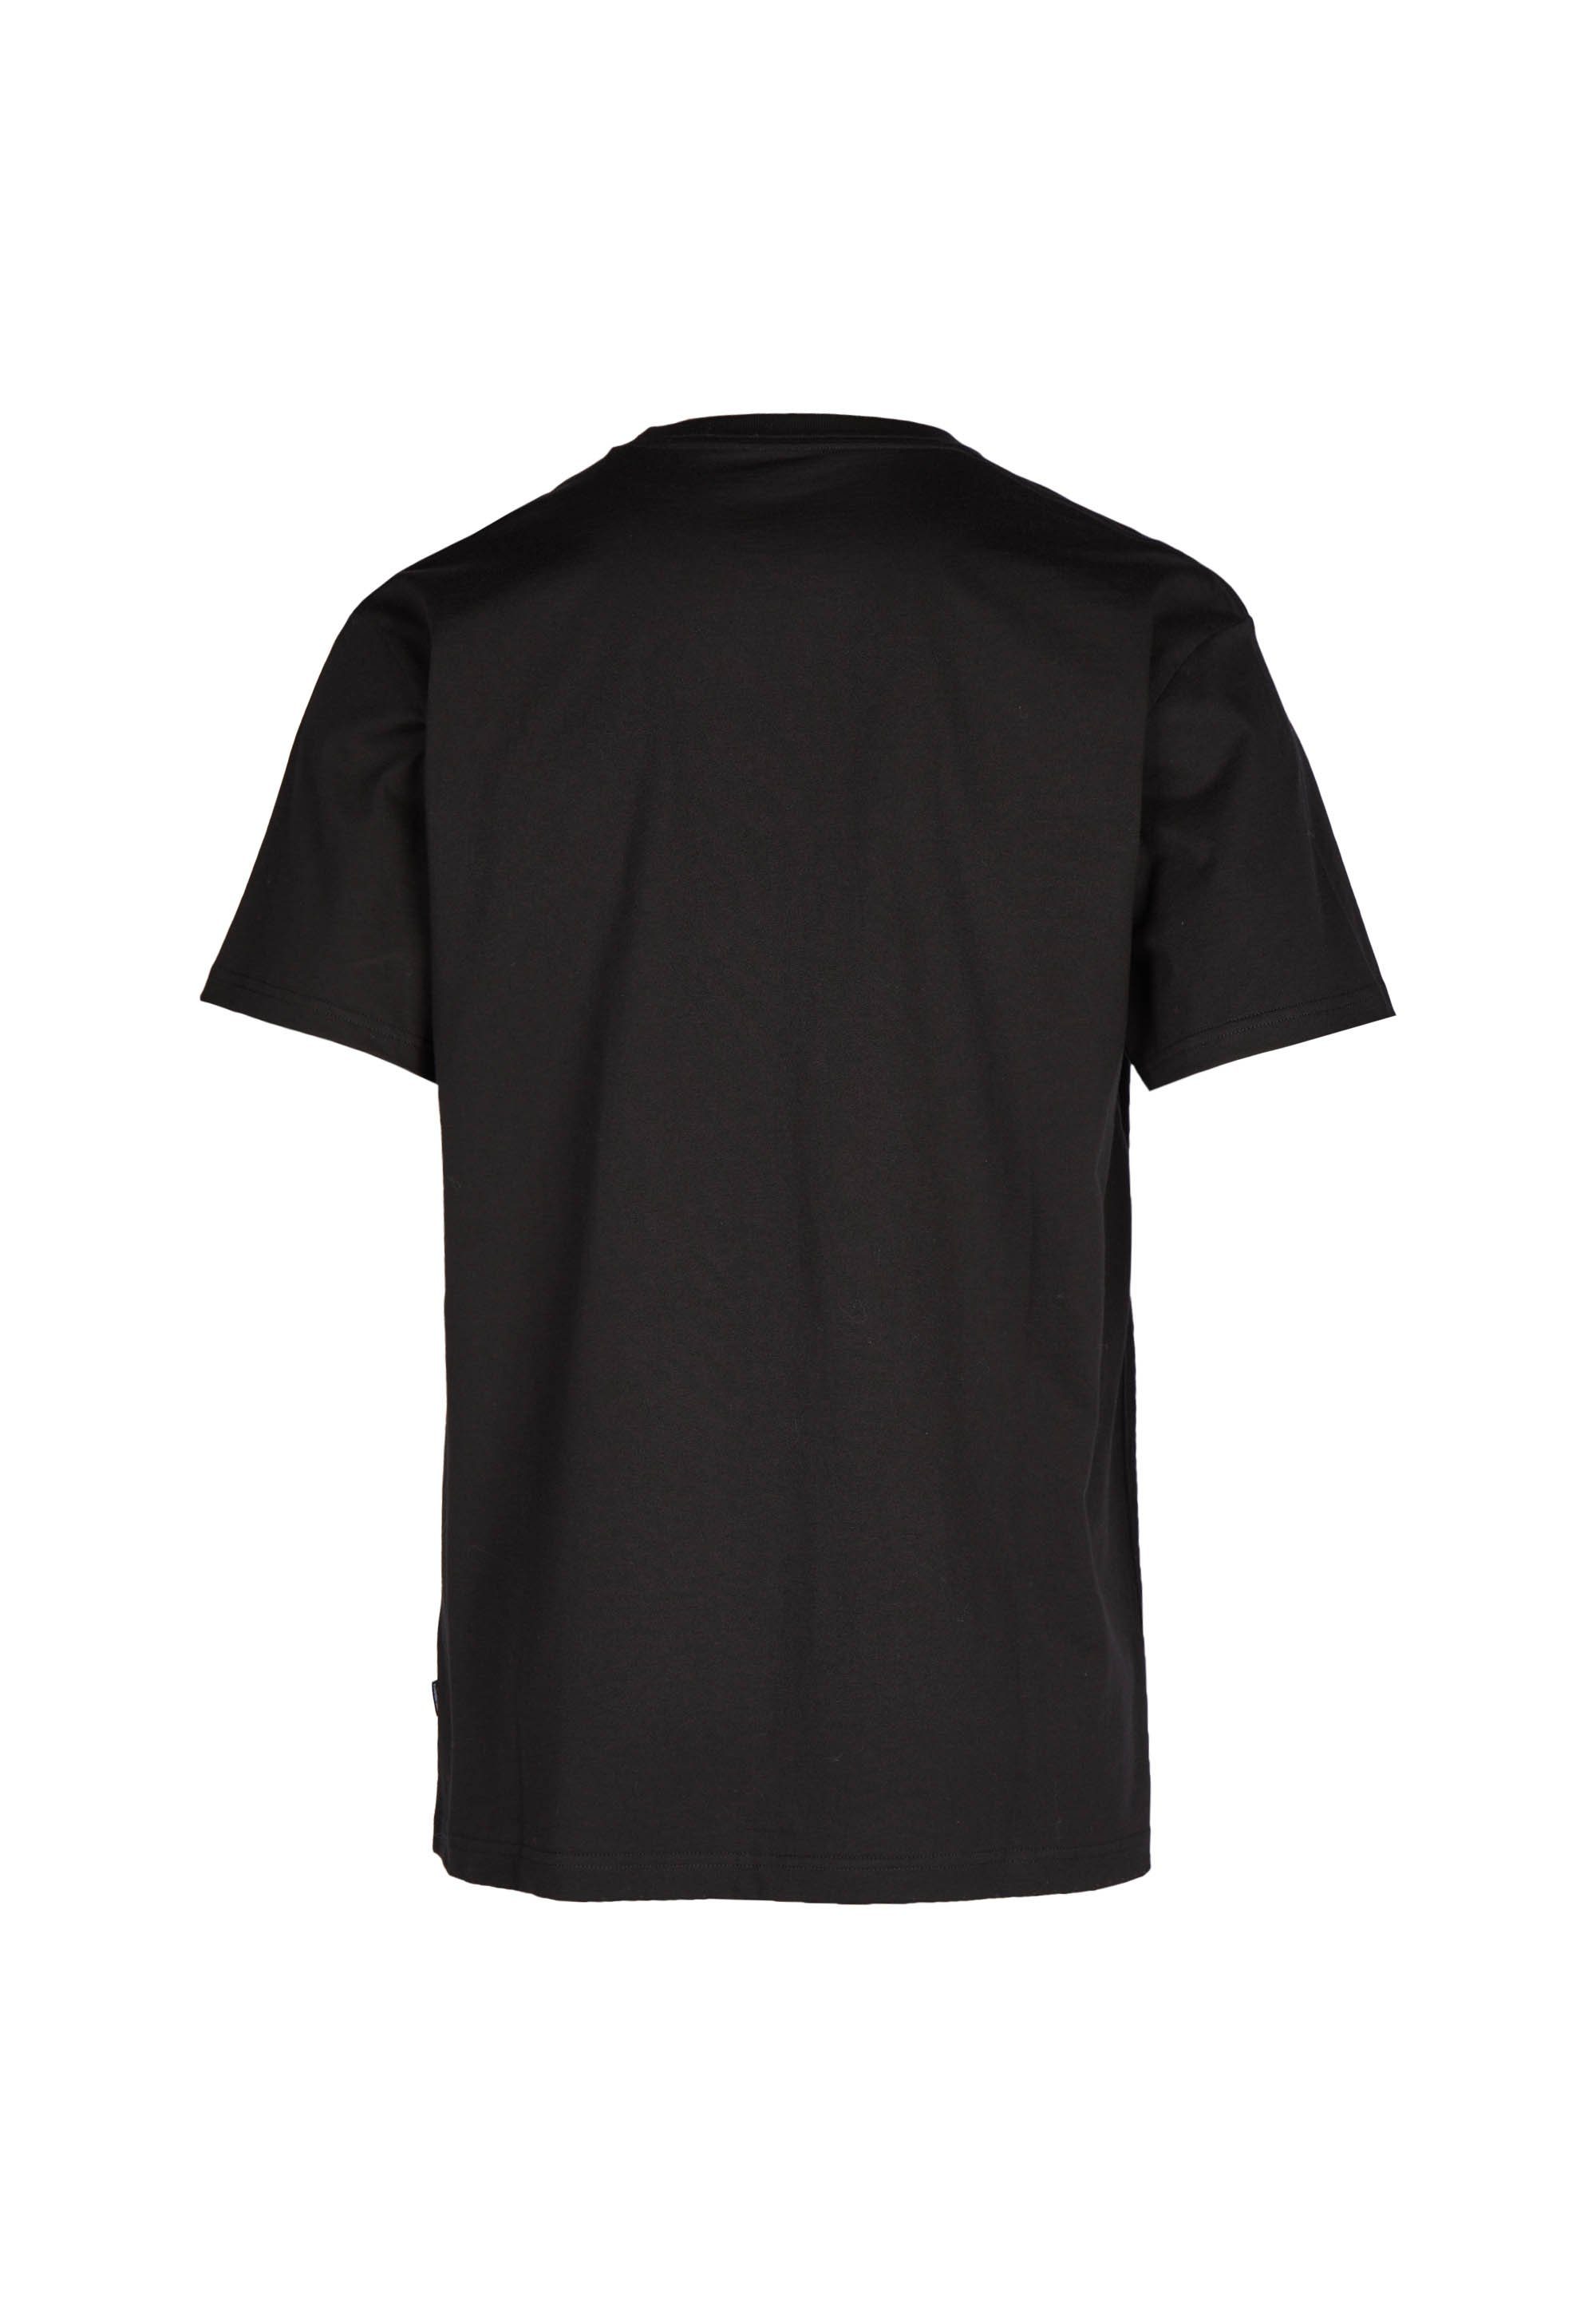 Mono schwarz Schnitt Gull T-Shirt Cleptomanicx mit Embroidery lockerem